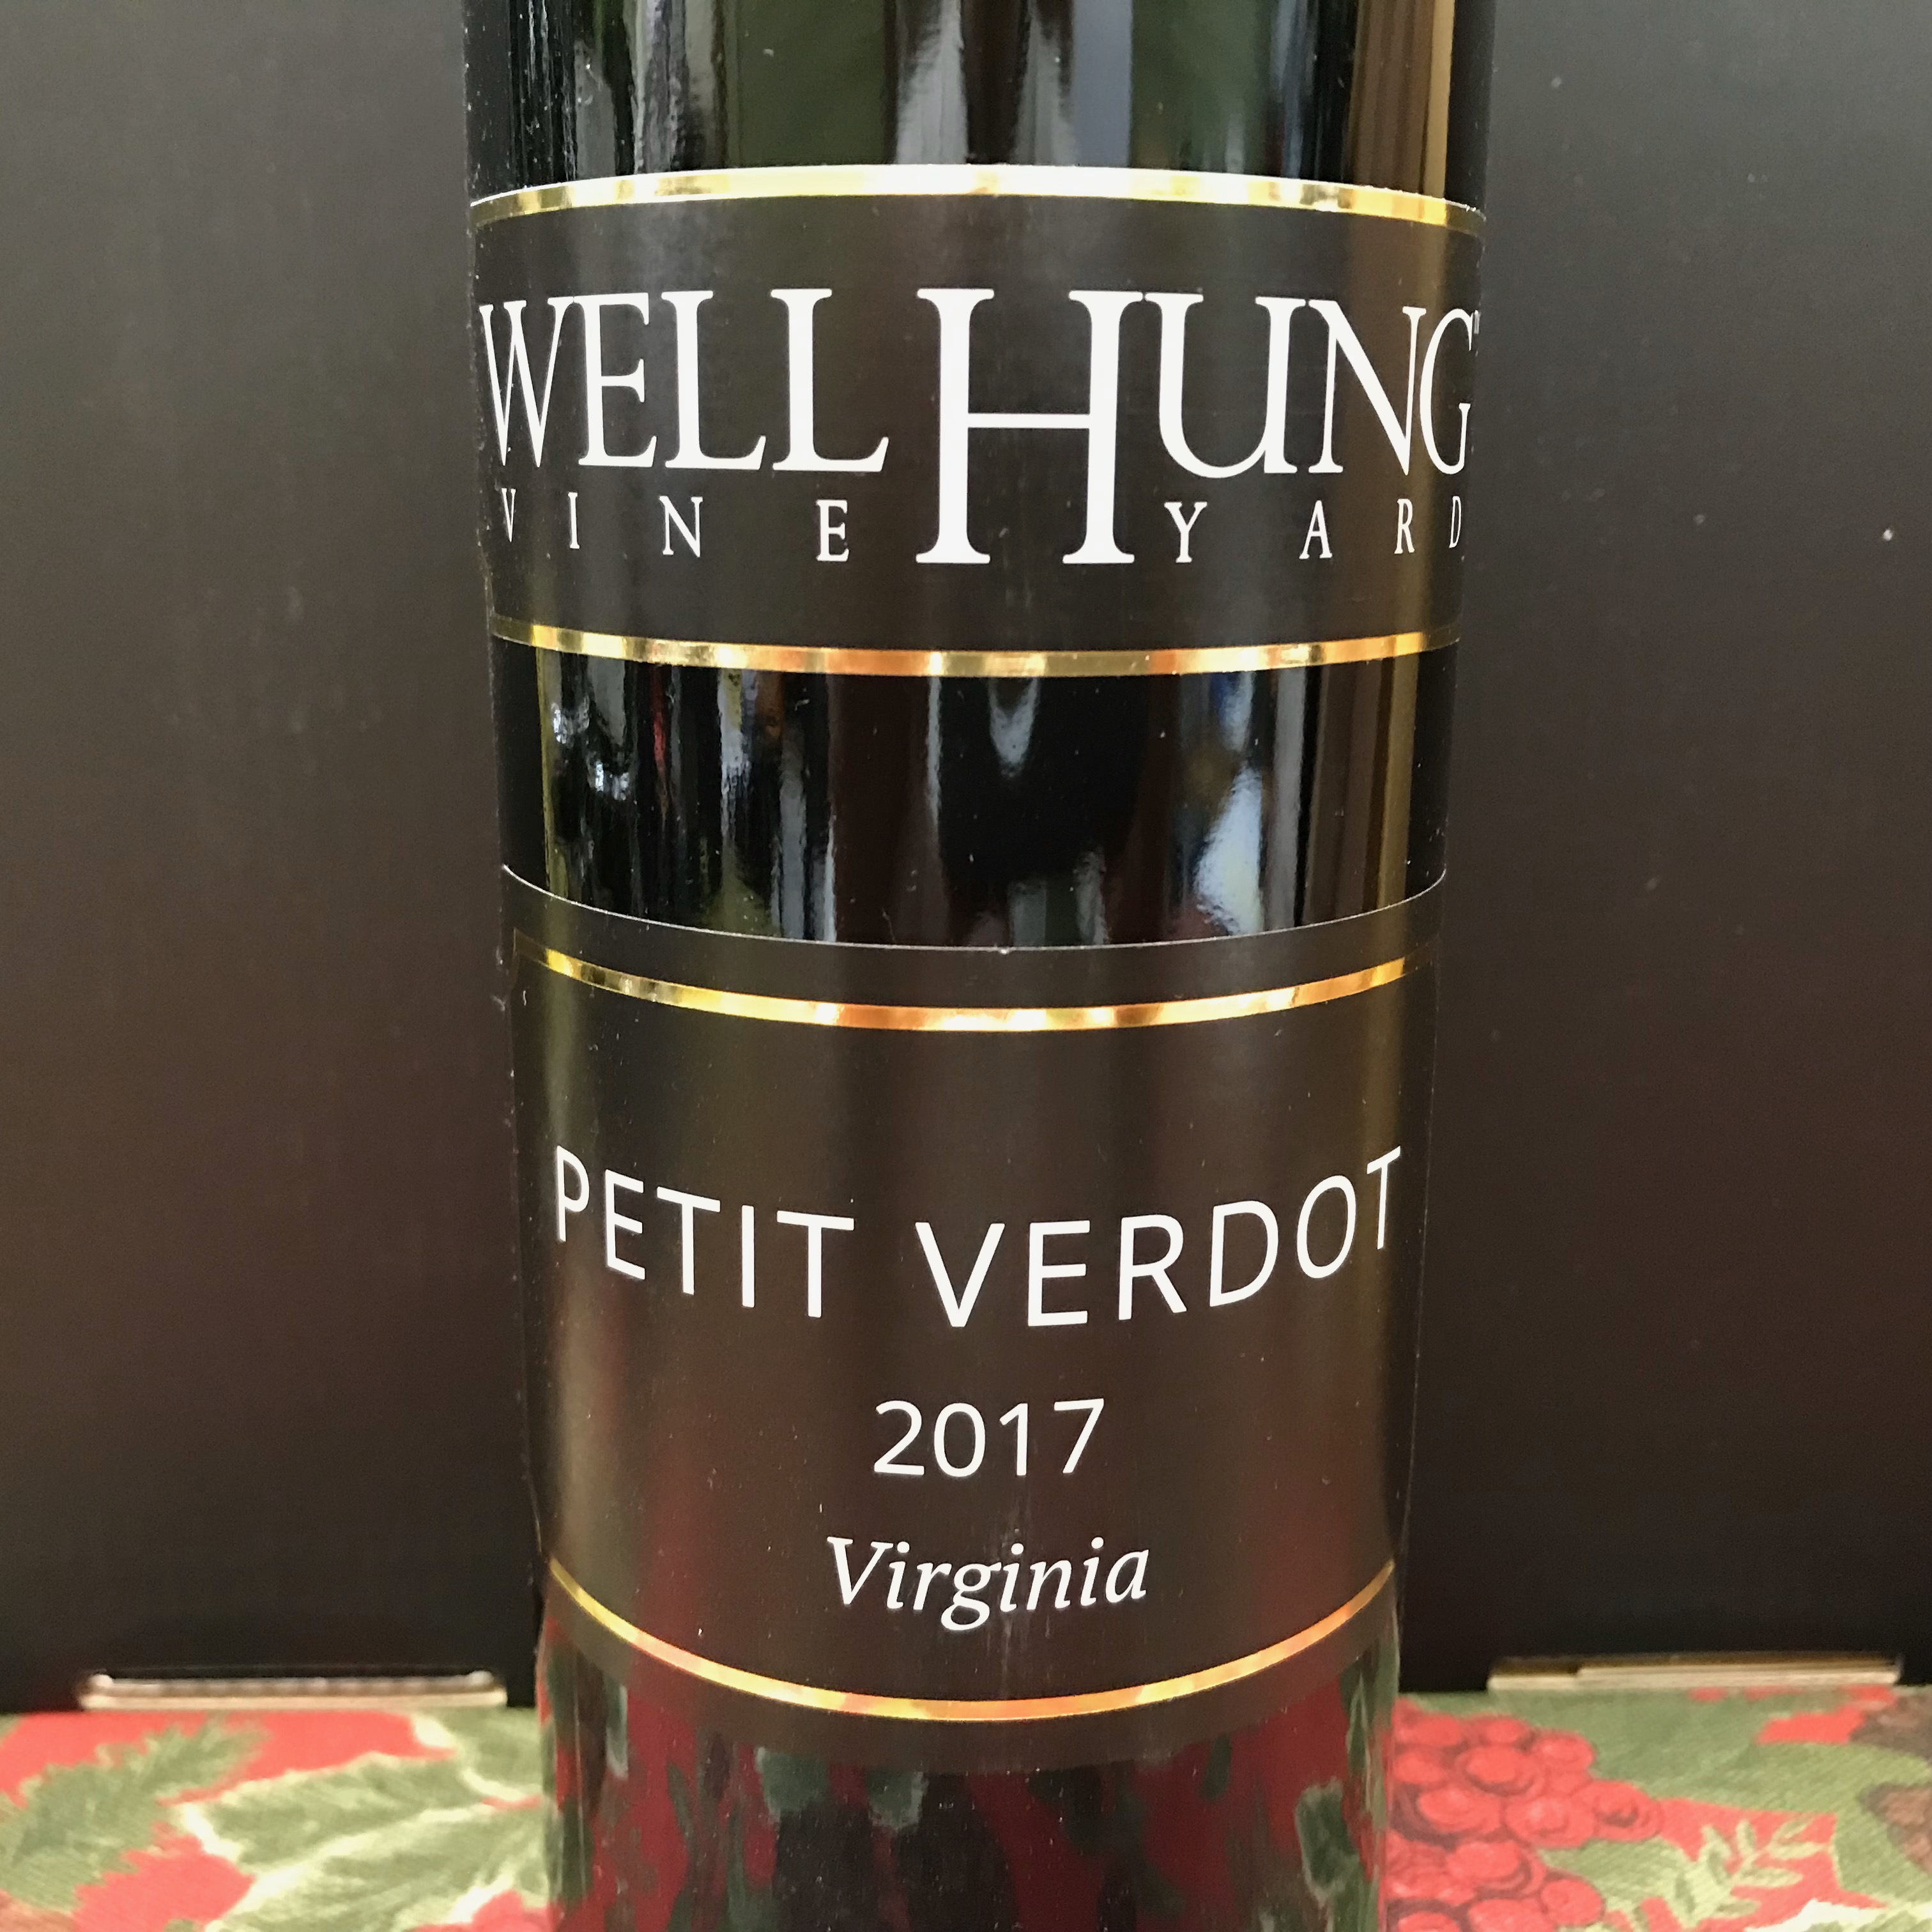 Well Hung Vineyard Petit Verdot Virginia 2017